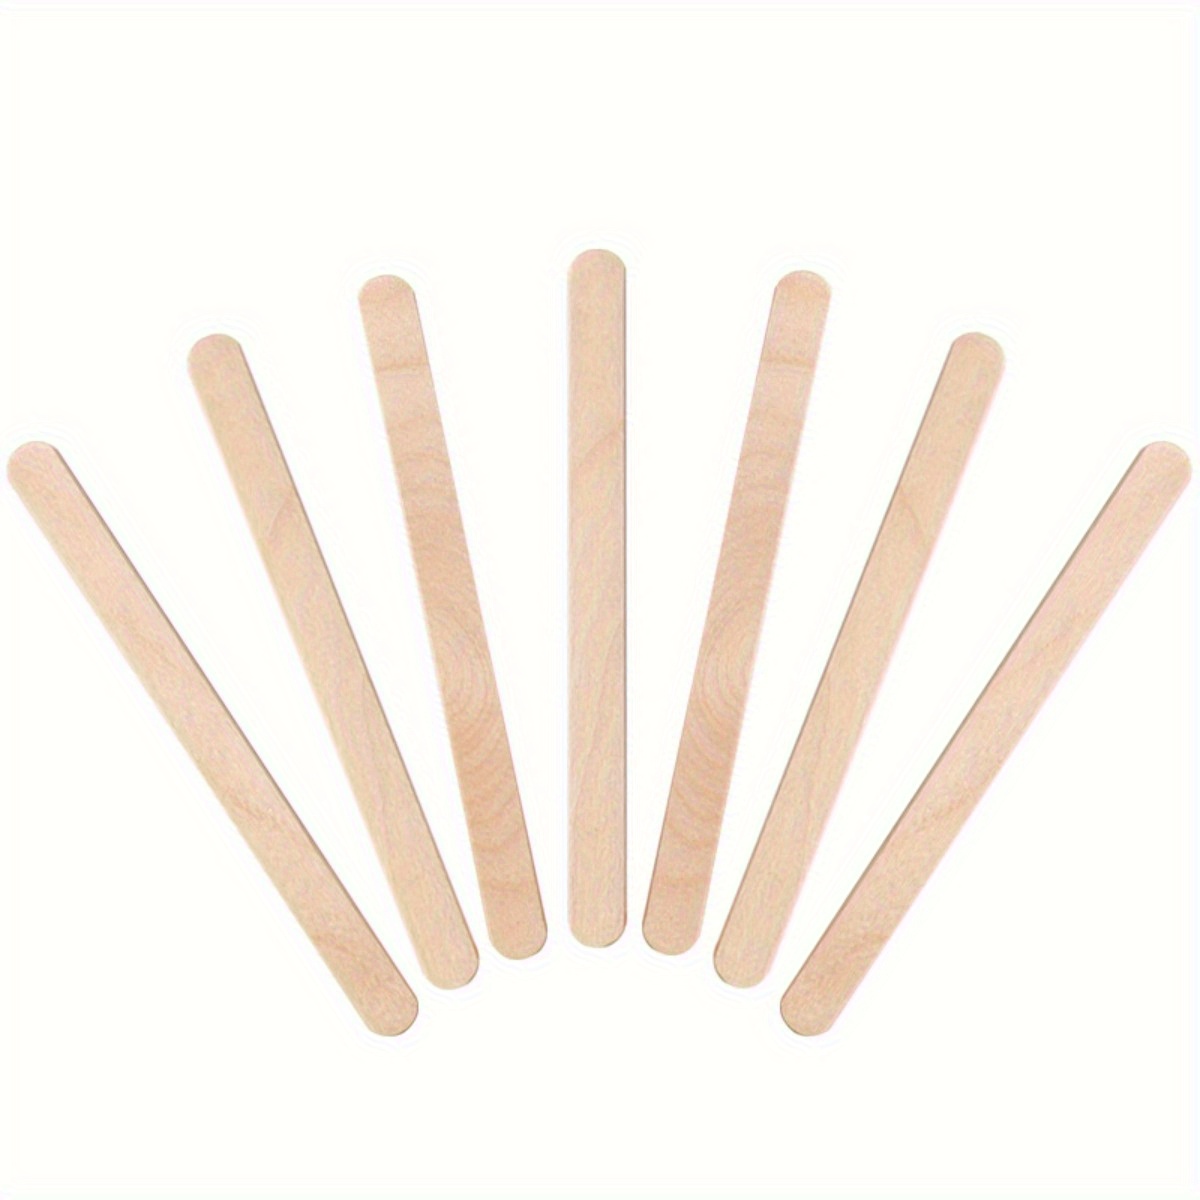 500 Pieces 7.87 inch Popsicle Stick, Ice Cream Sticks, Jumbo Craft Sticks, Premium Natural Wooden Craft Sticks Ideal for Building Model, Handicraft